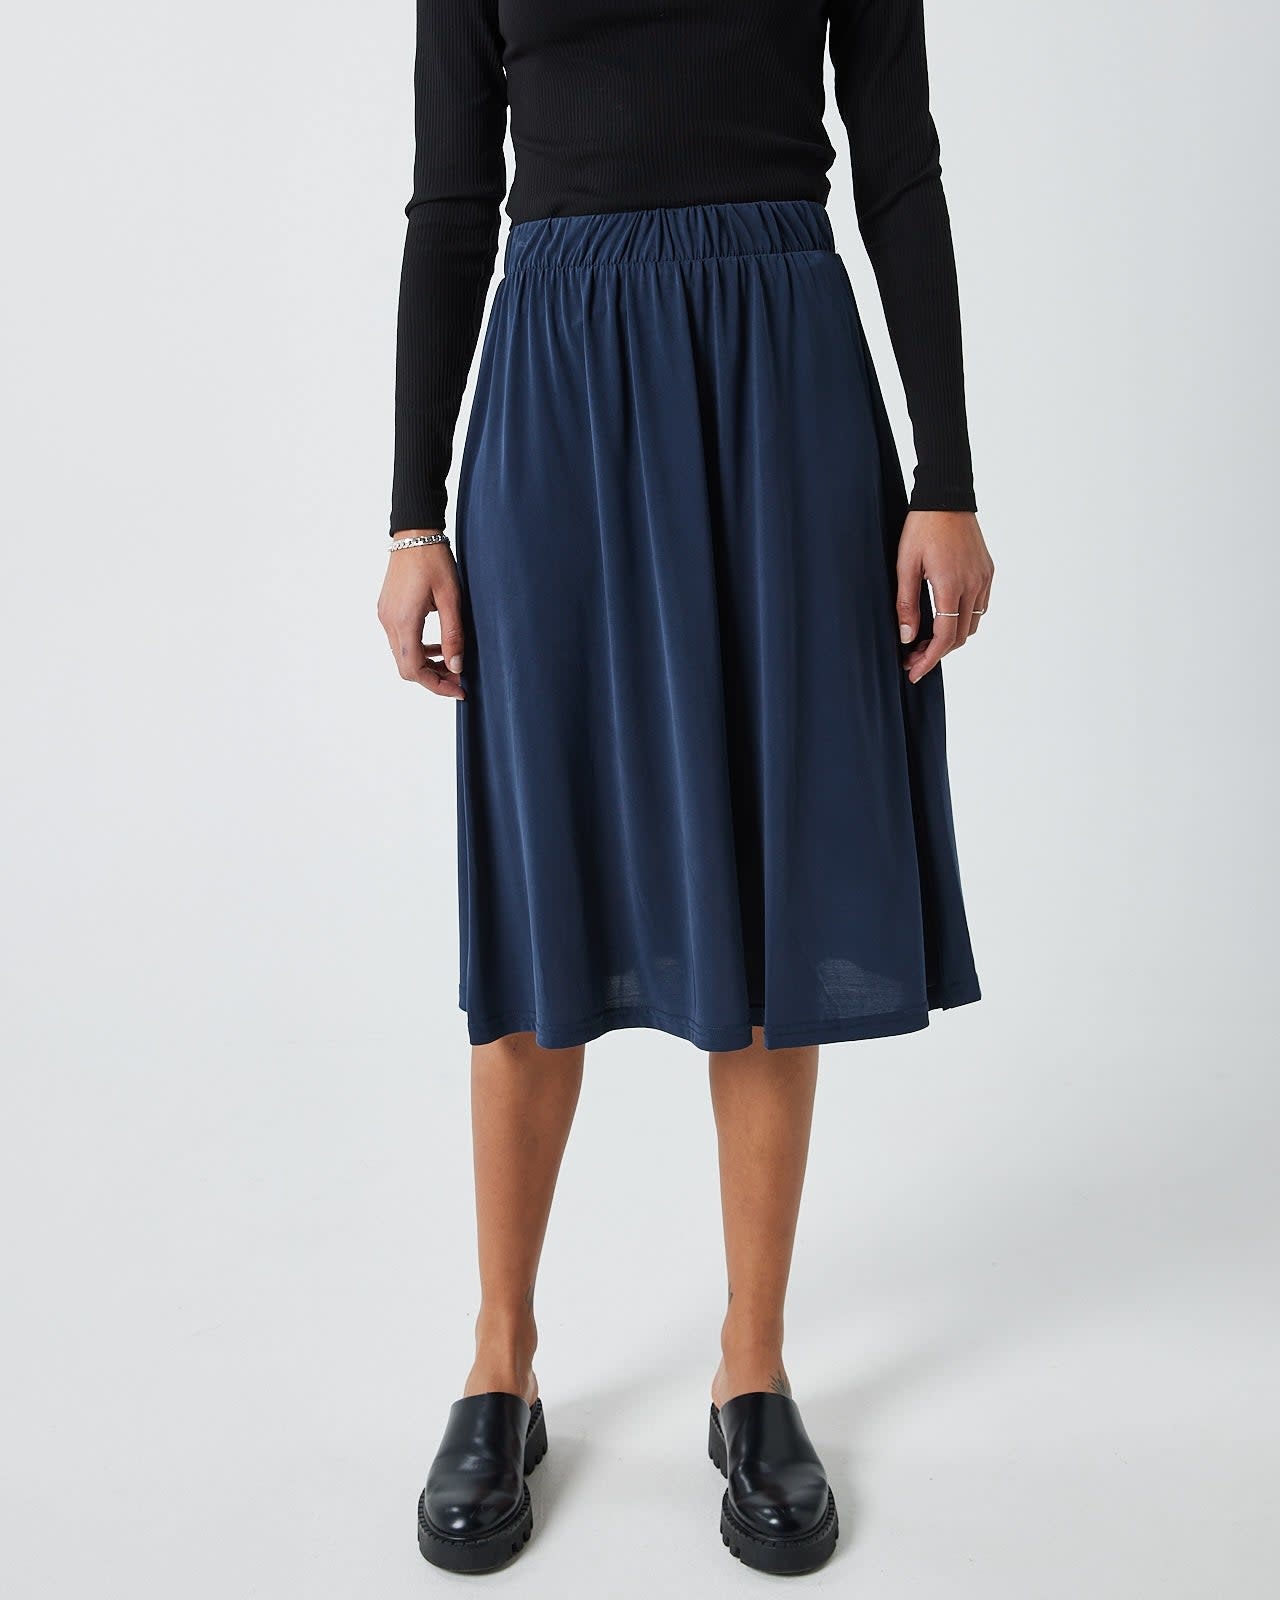 Minimum Minimum, Regisse Skirt, navy blazer, M